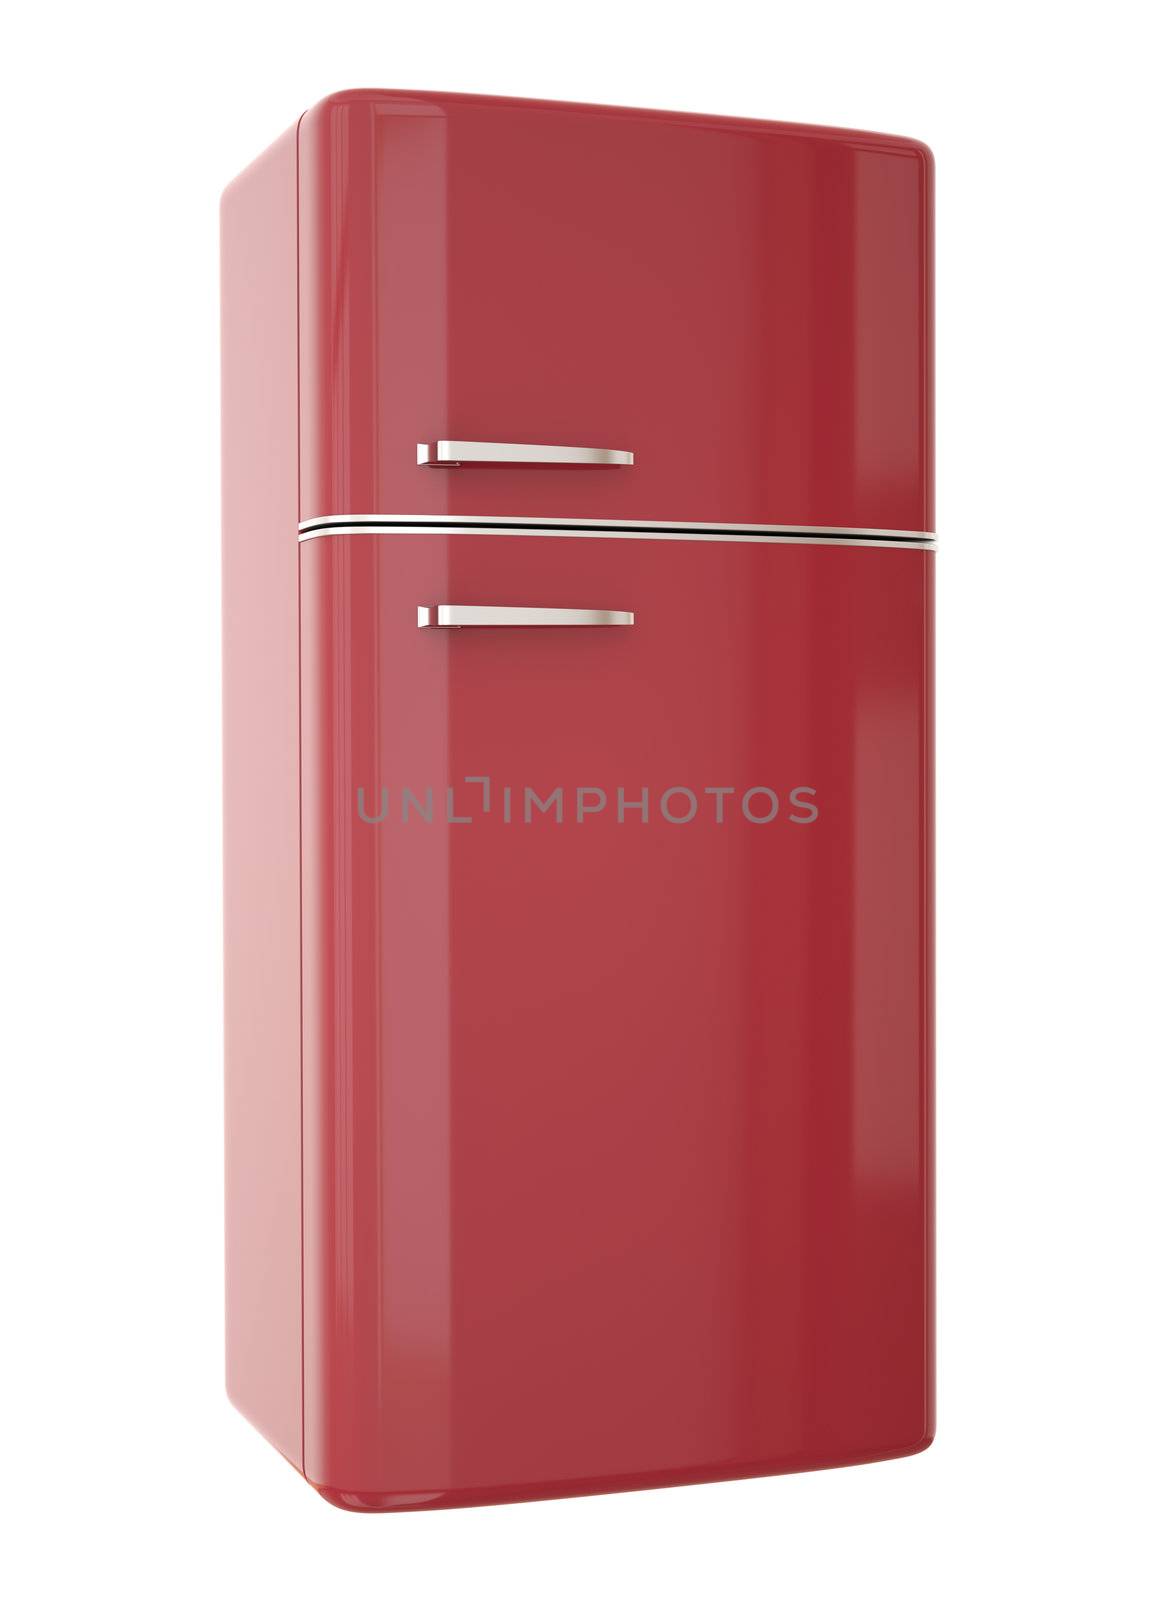 Red refrigerator. 3D render.